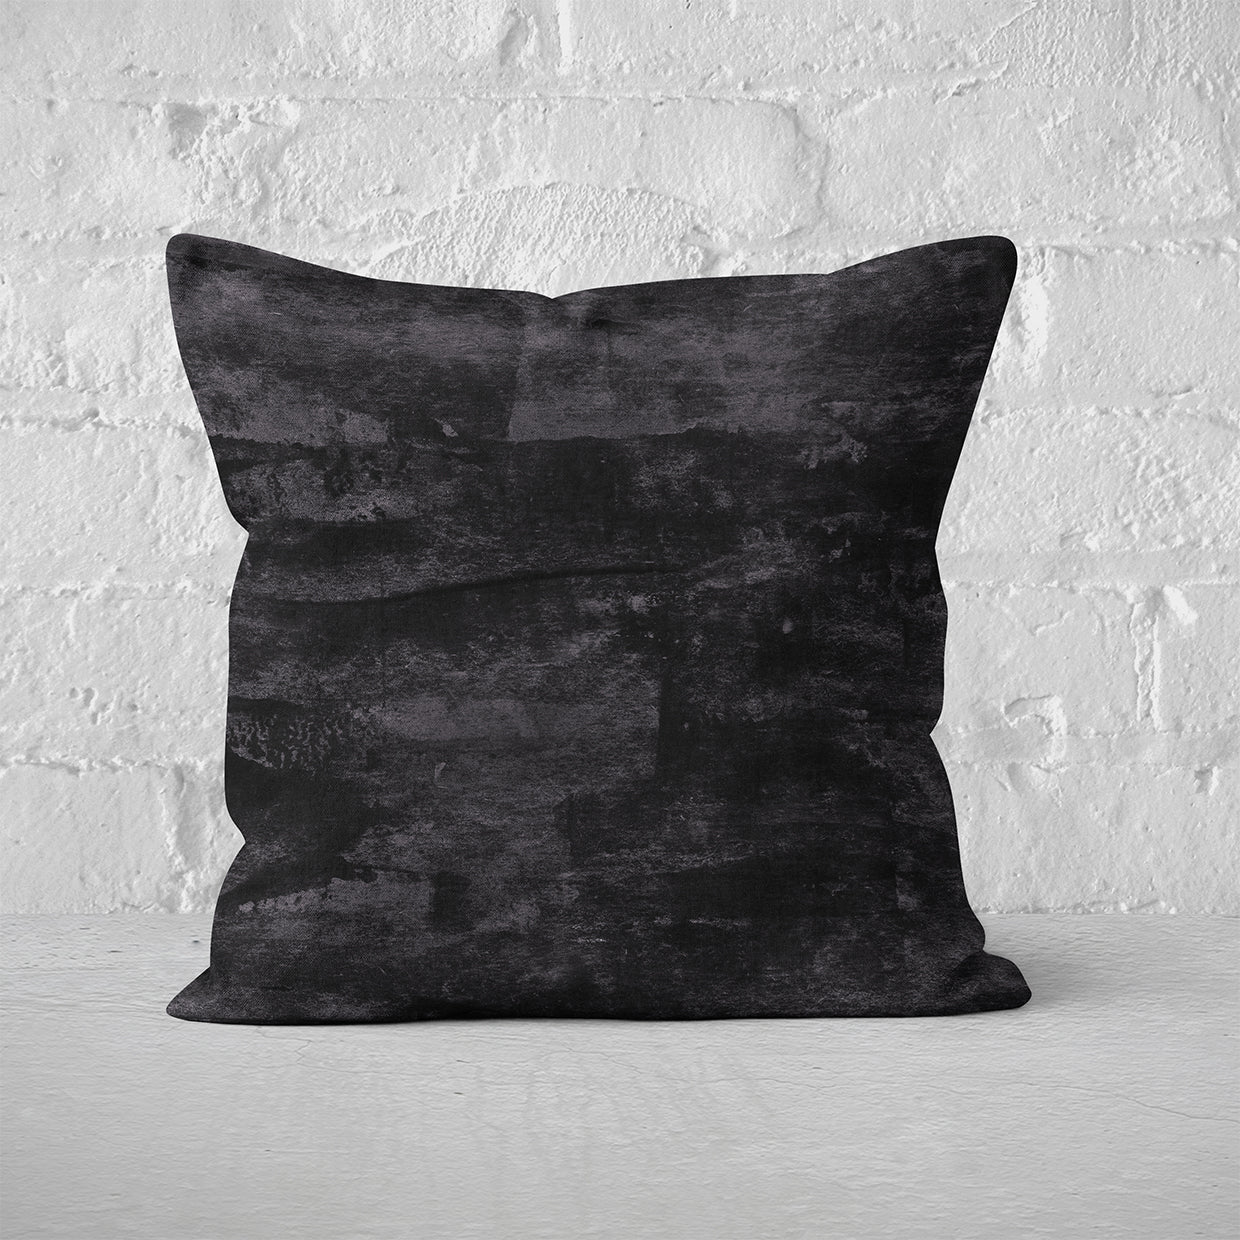 Pillow Cover Art Feature 'Satellite' - Black & Dark Magenta - Cotton Twill